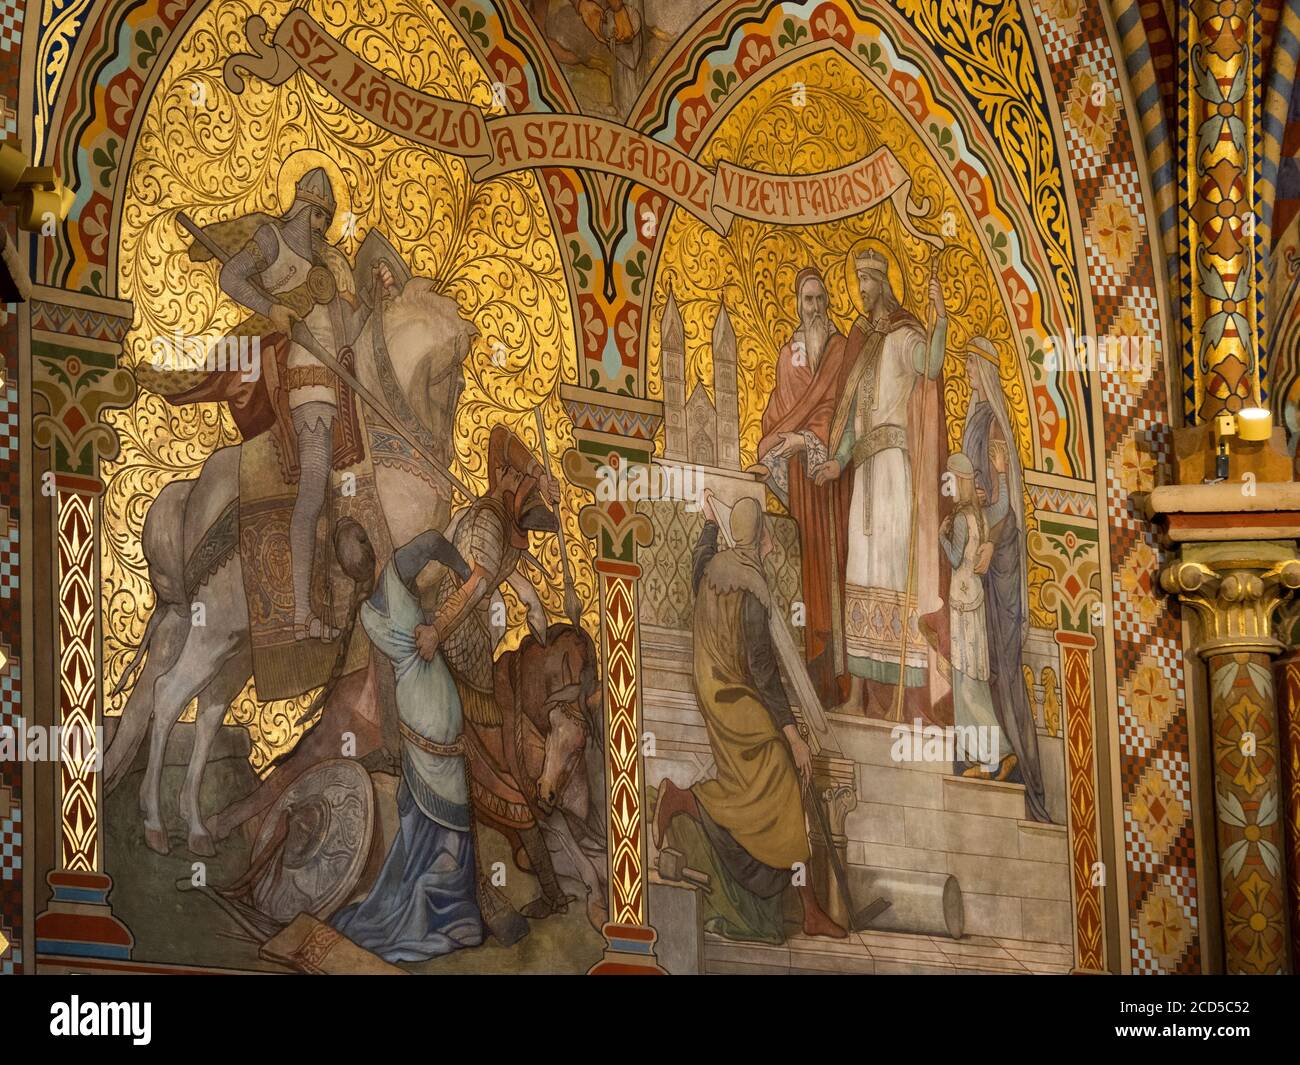 Vista del fresco en la iglesia, Buda, Budapest, Hungría Foto de stock